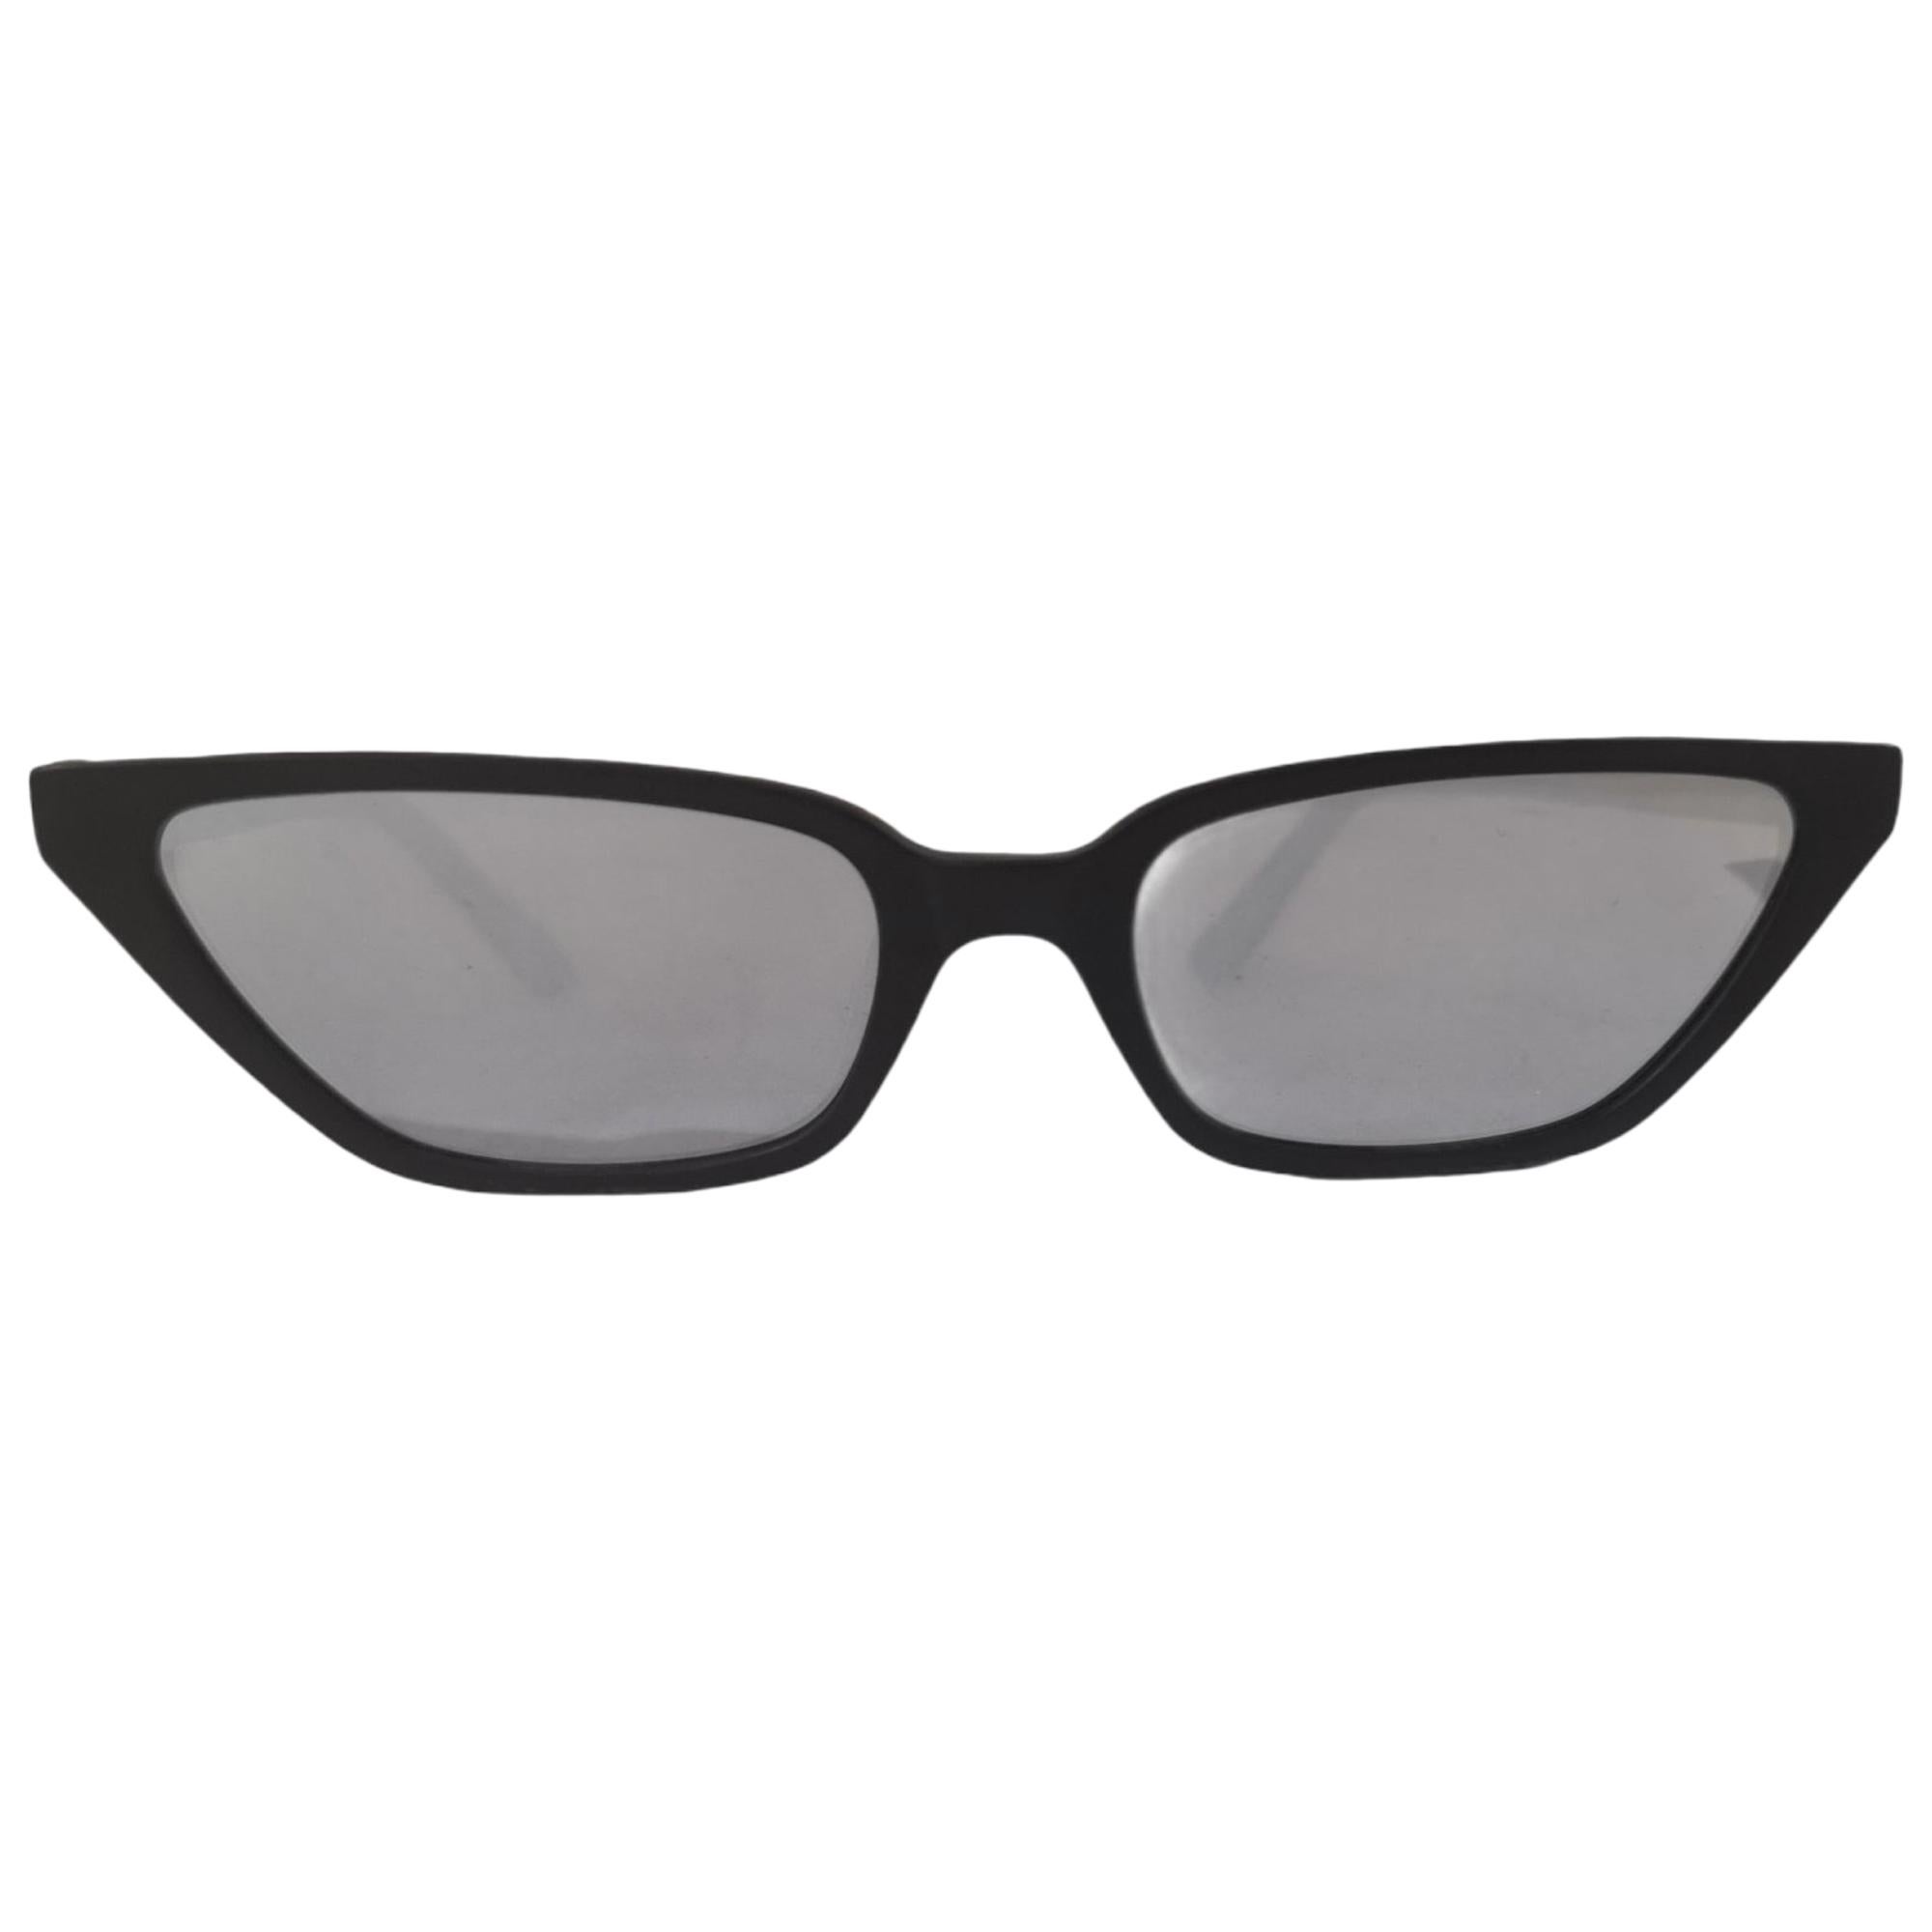 Black mirrored glasses sunglasses NWOT